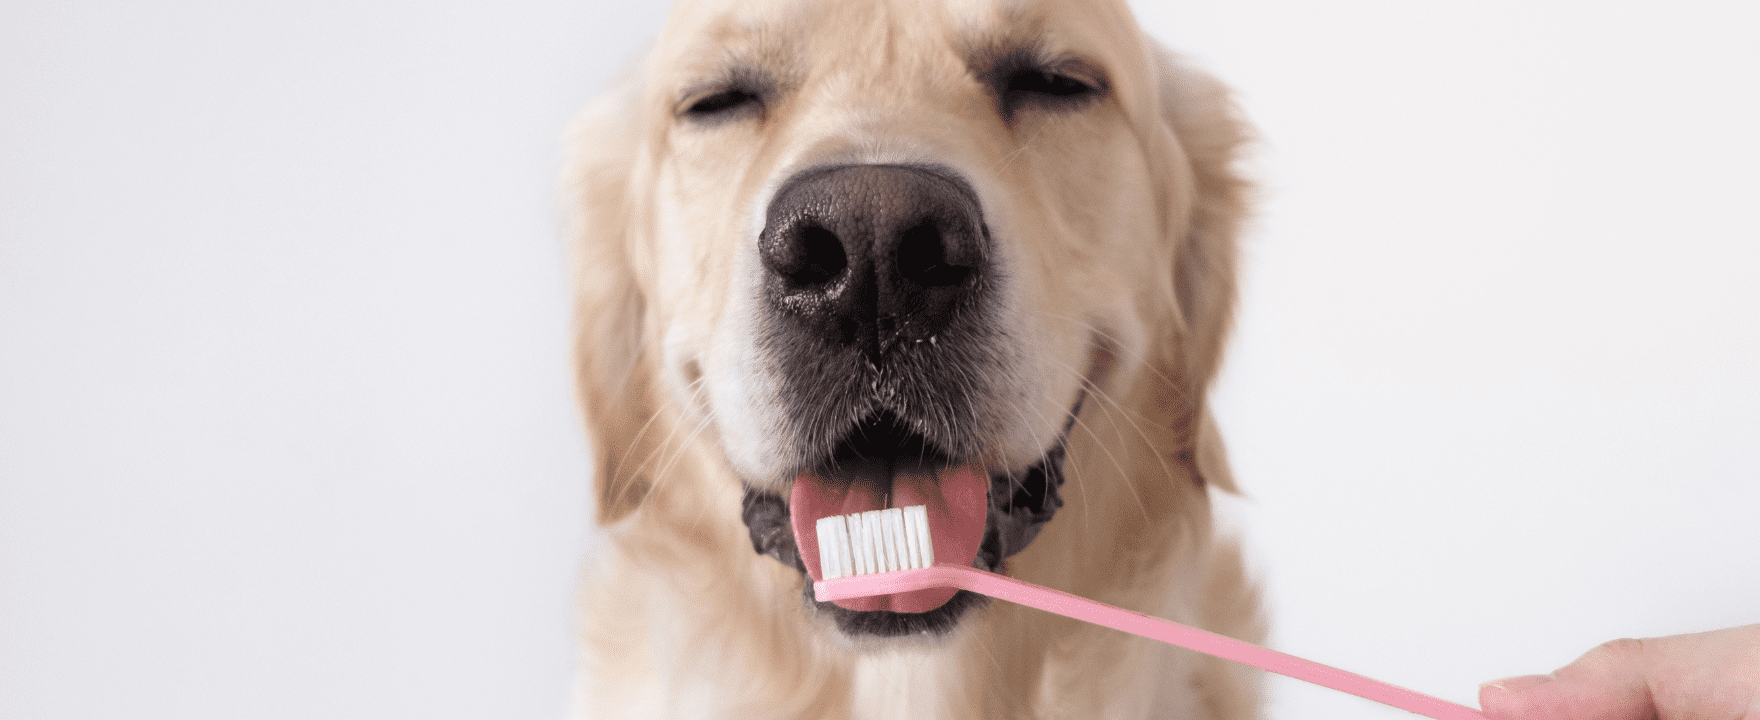 A happy dog having their teeth brushed.